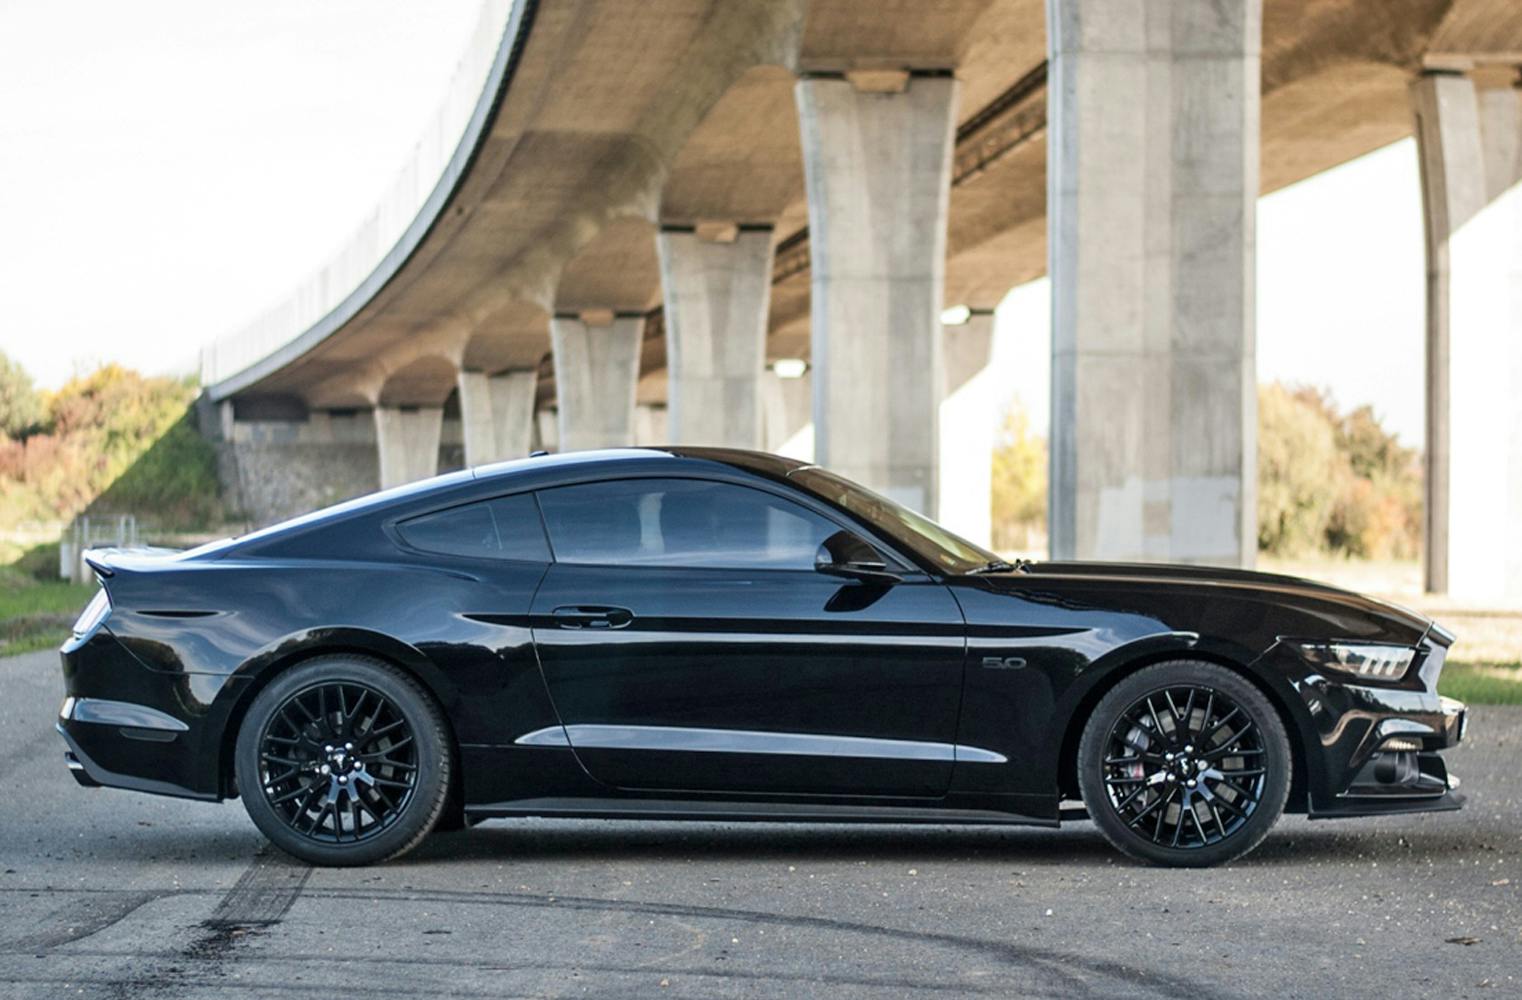 Ford Mustang GT 5.0 selber fahren | 30 Minuten im Pony Car